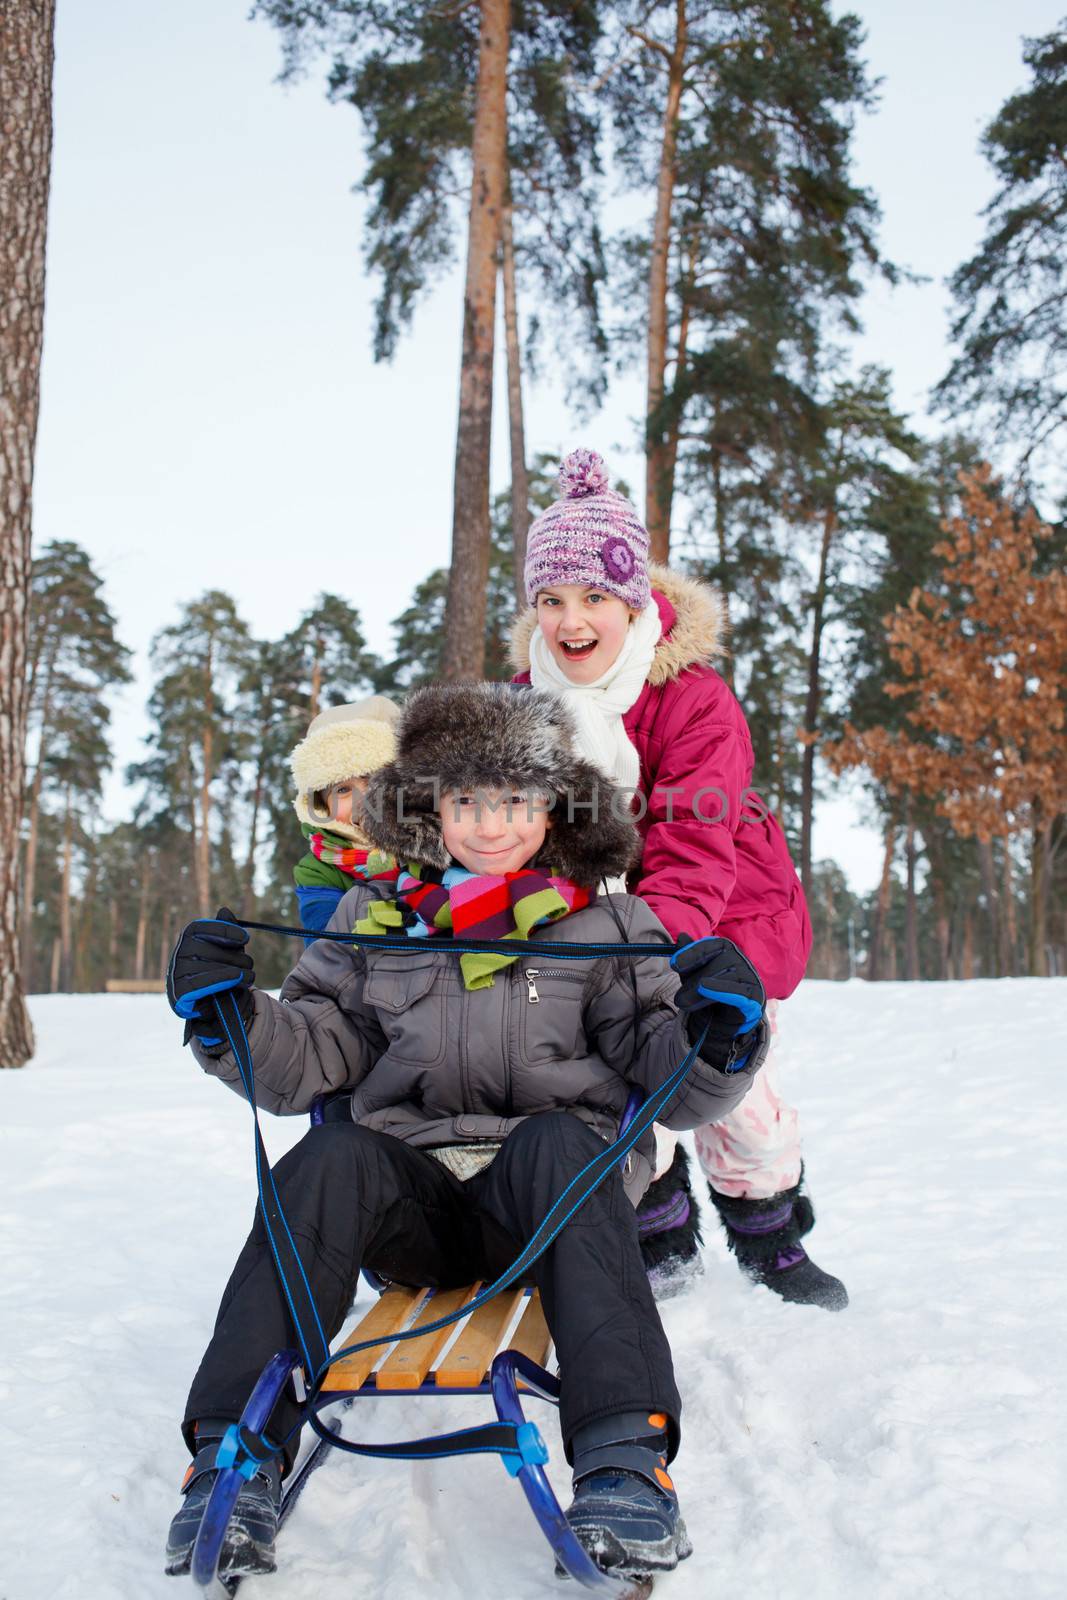 Children on sleds in snow by maxoliki